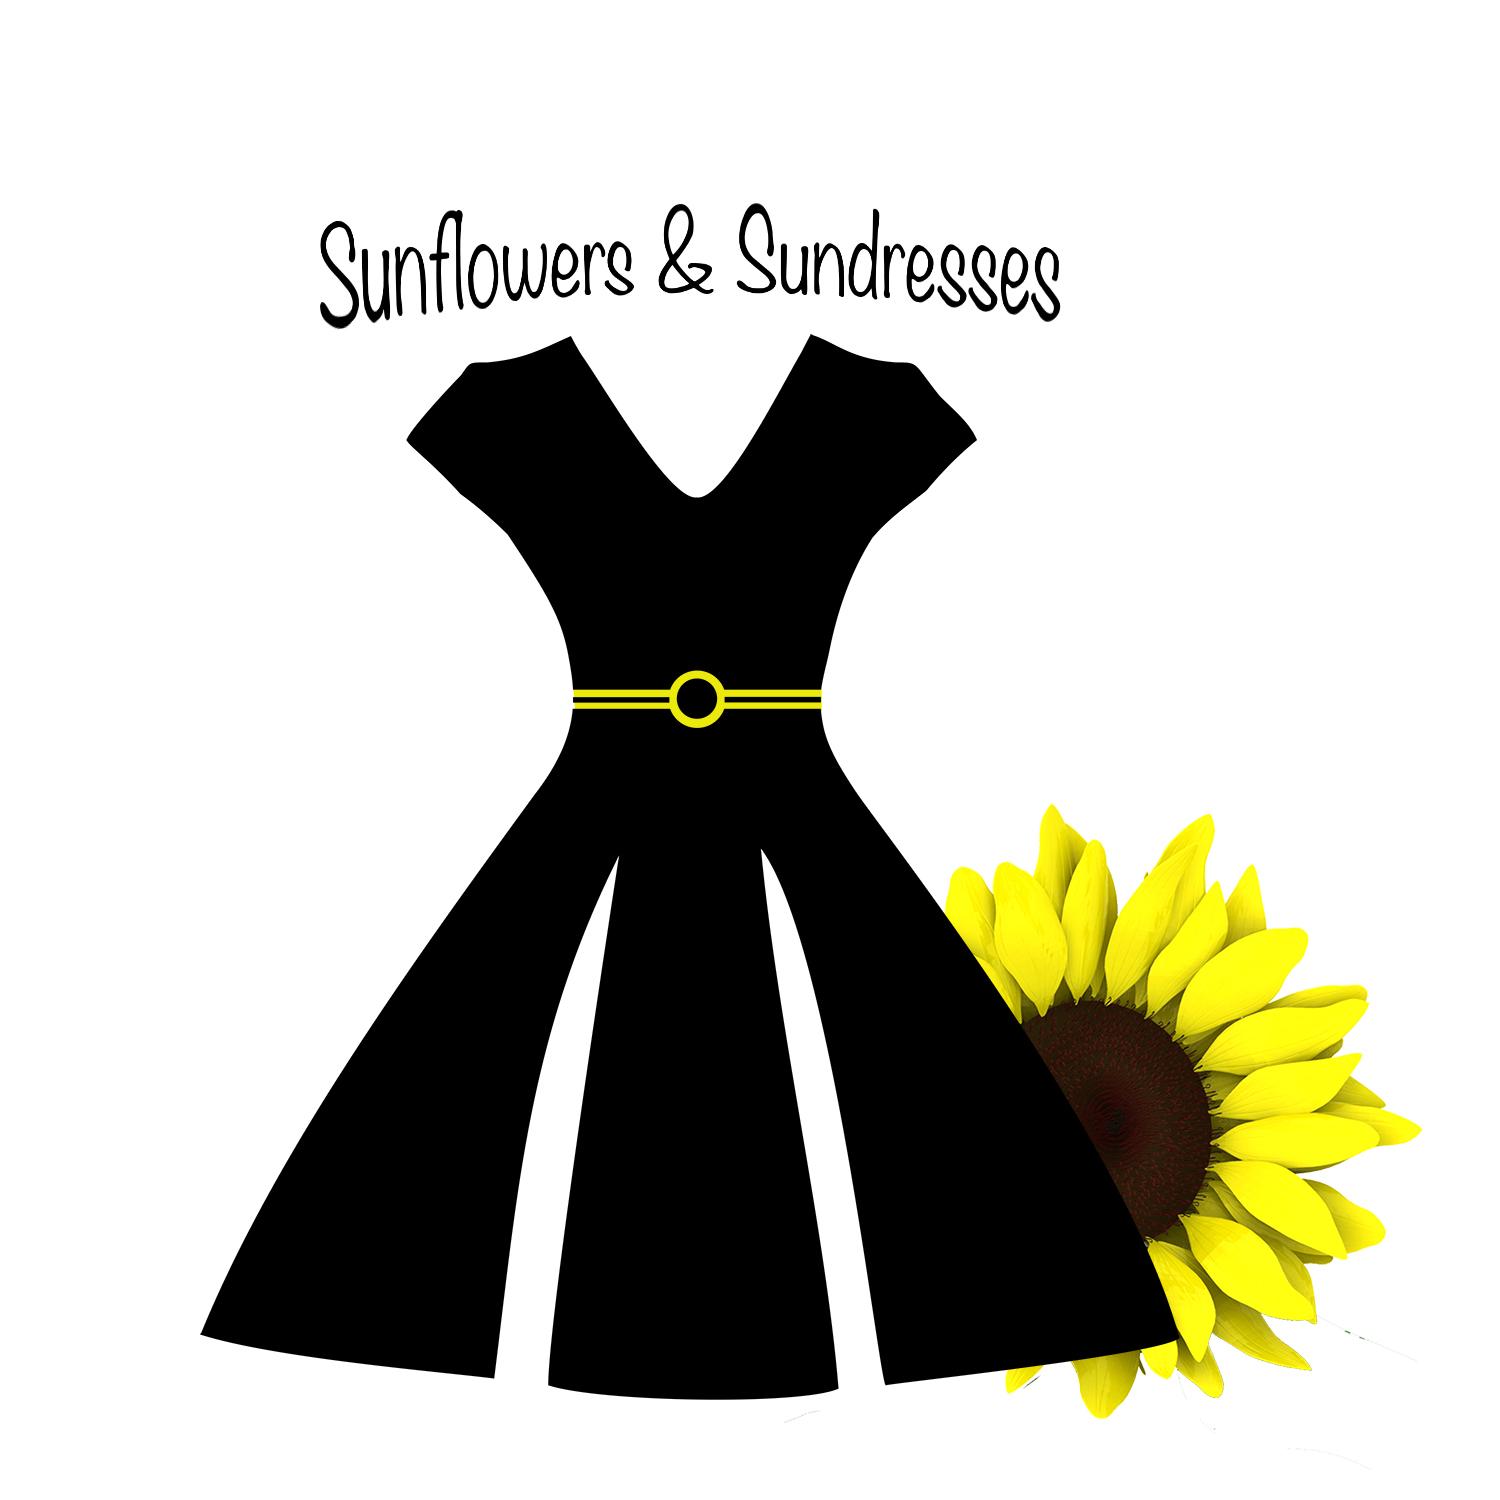 Sunflowers and Sundresses: Styling sweatshirts